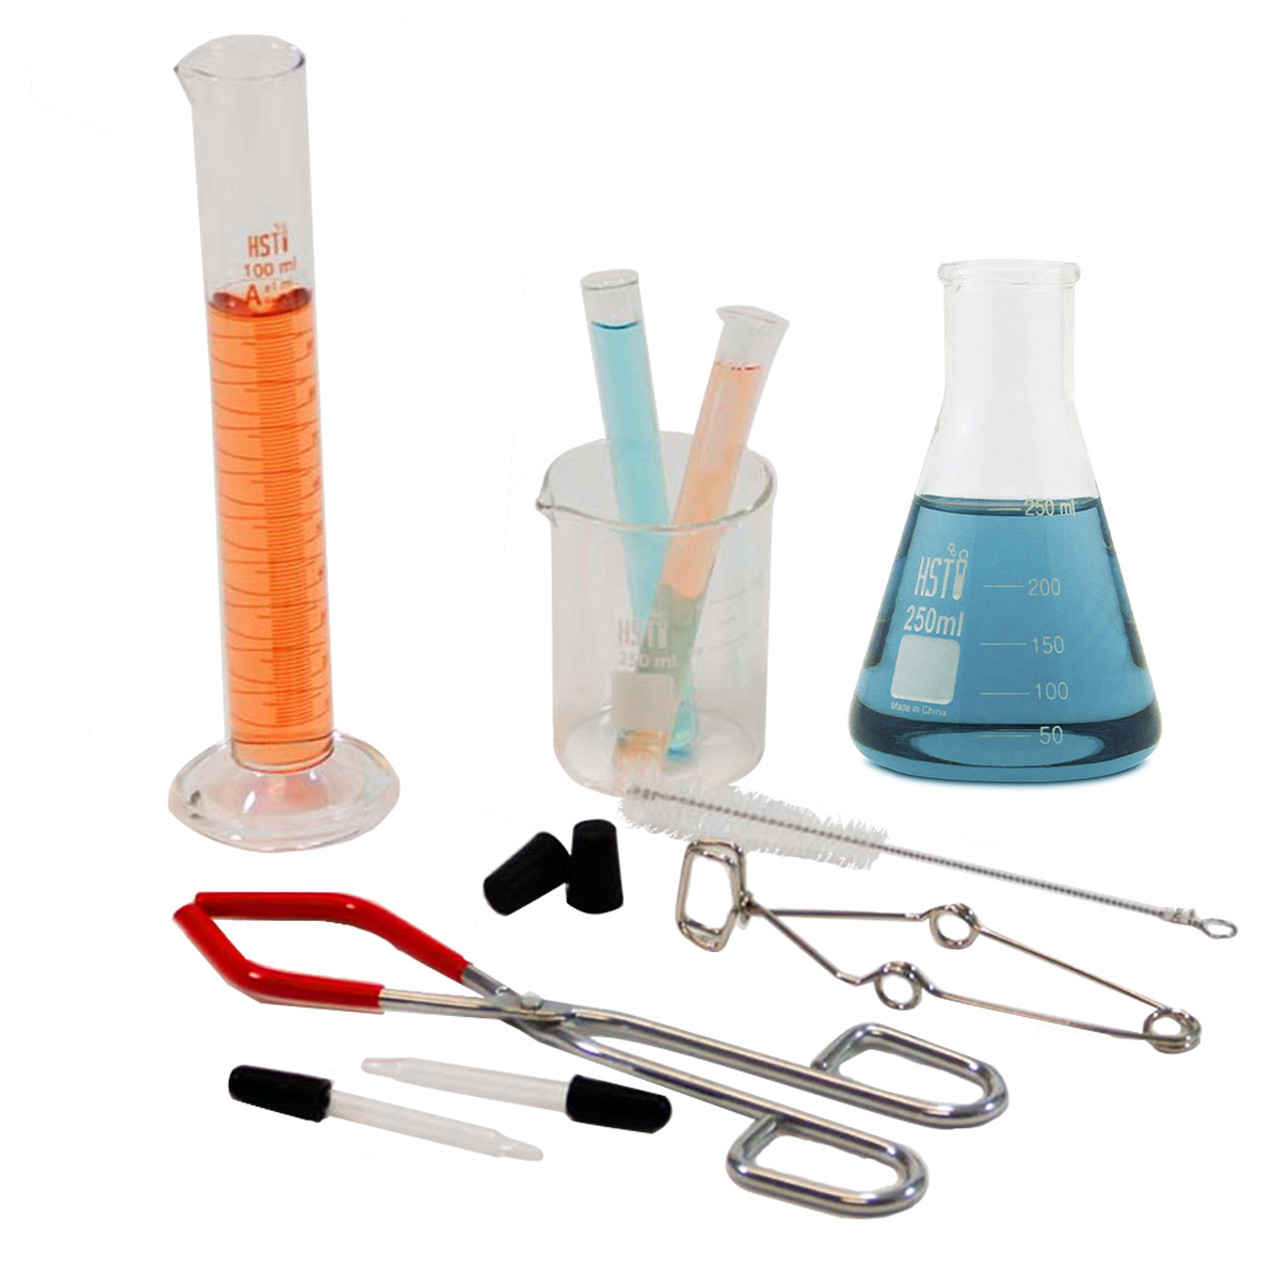 Basic Chemistry Lab Equipment & Essentials Set for Students